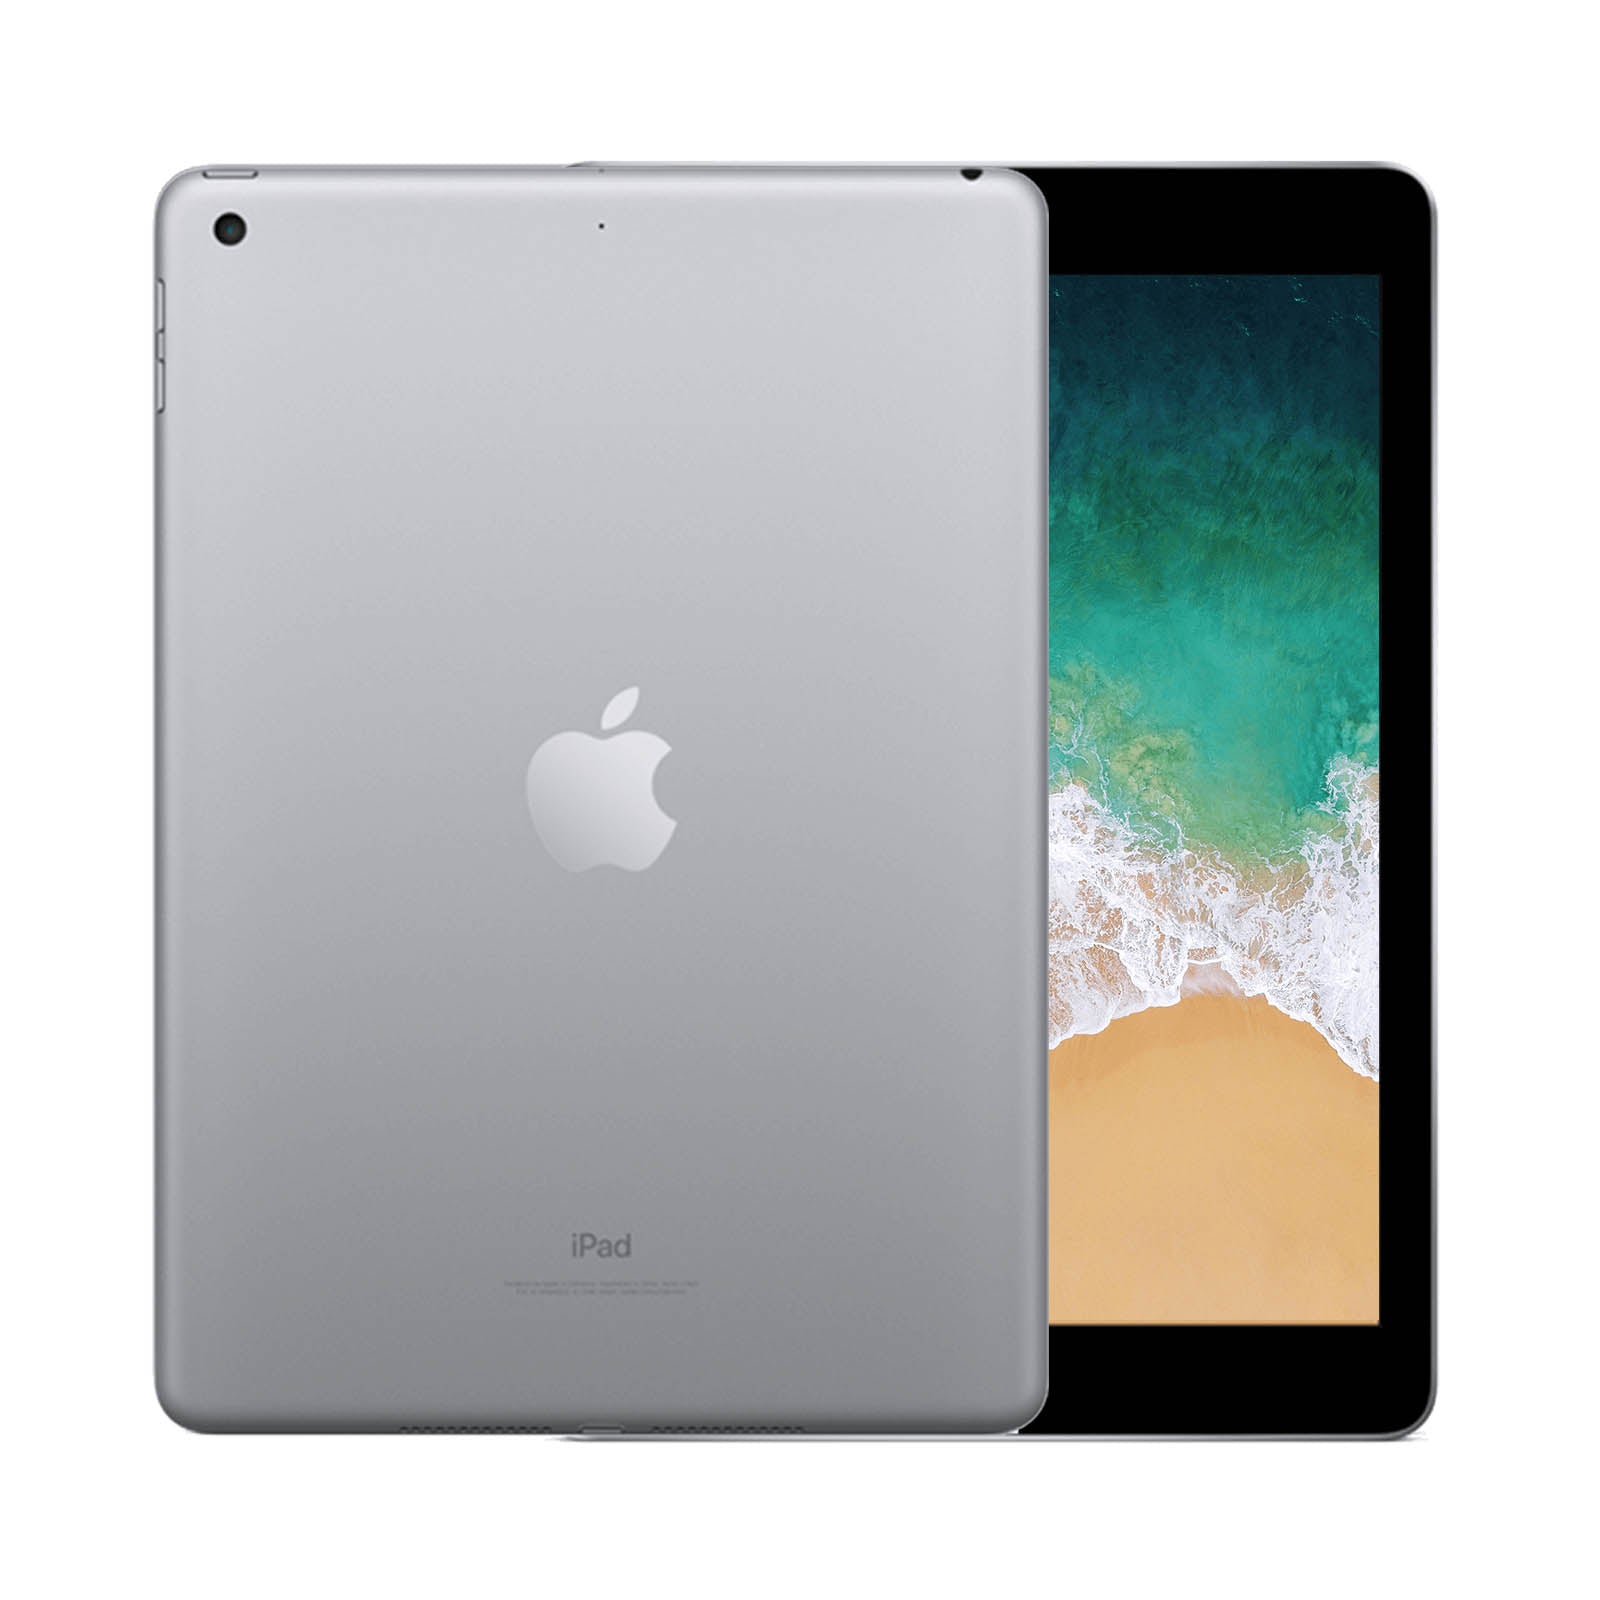 Apple iPad 5 128GB WiFi Space Grey - Very Good 128GB Space Grey Very Good